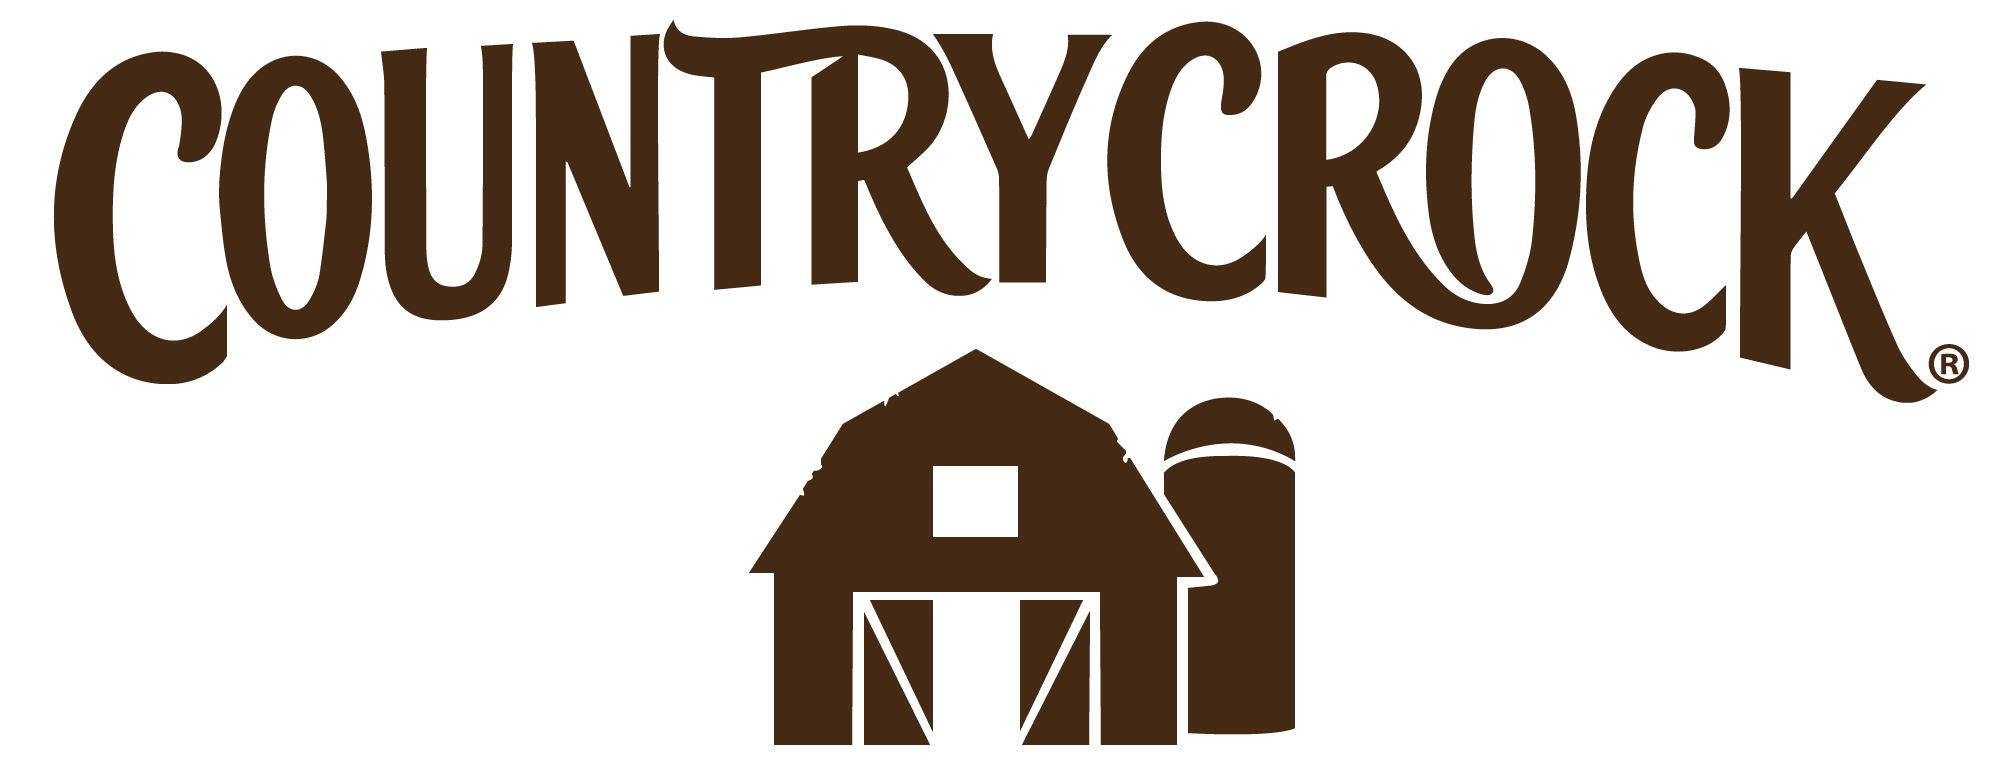 Country Crock Logo